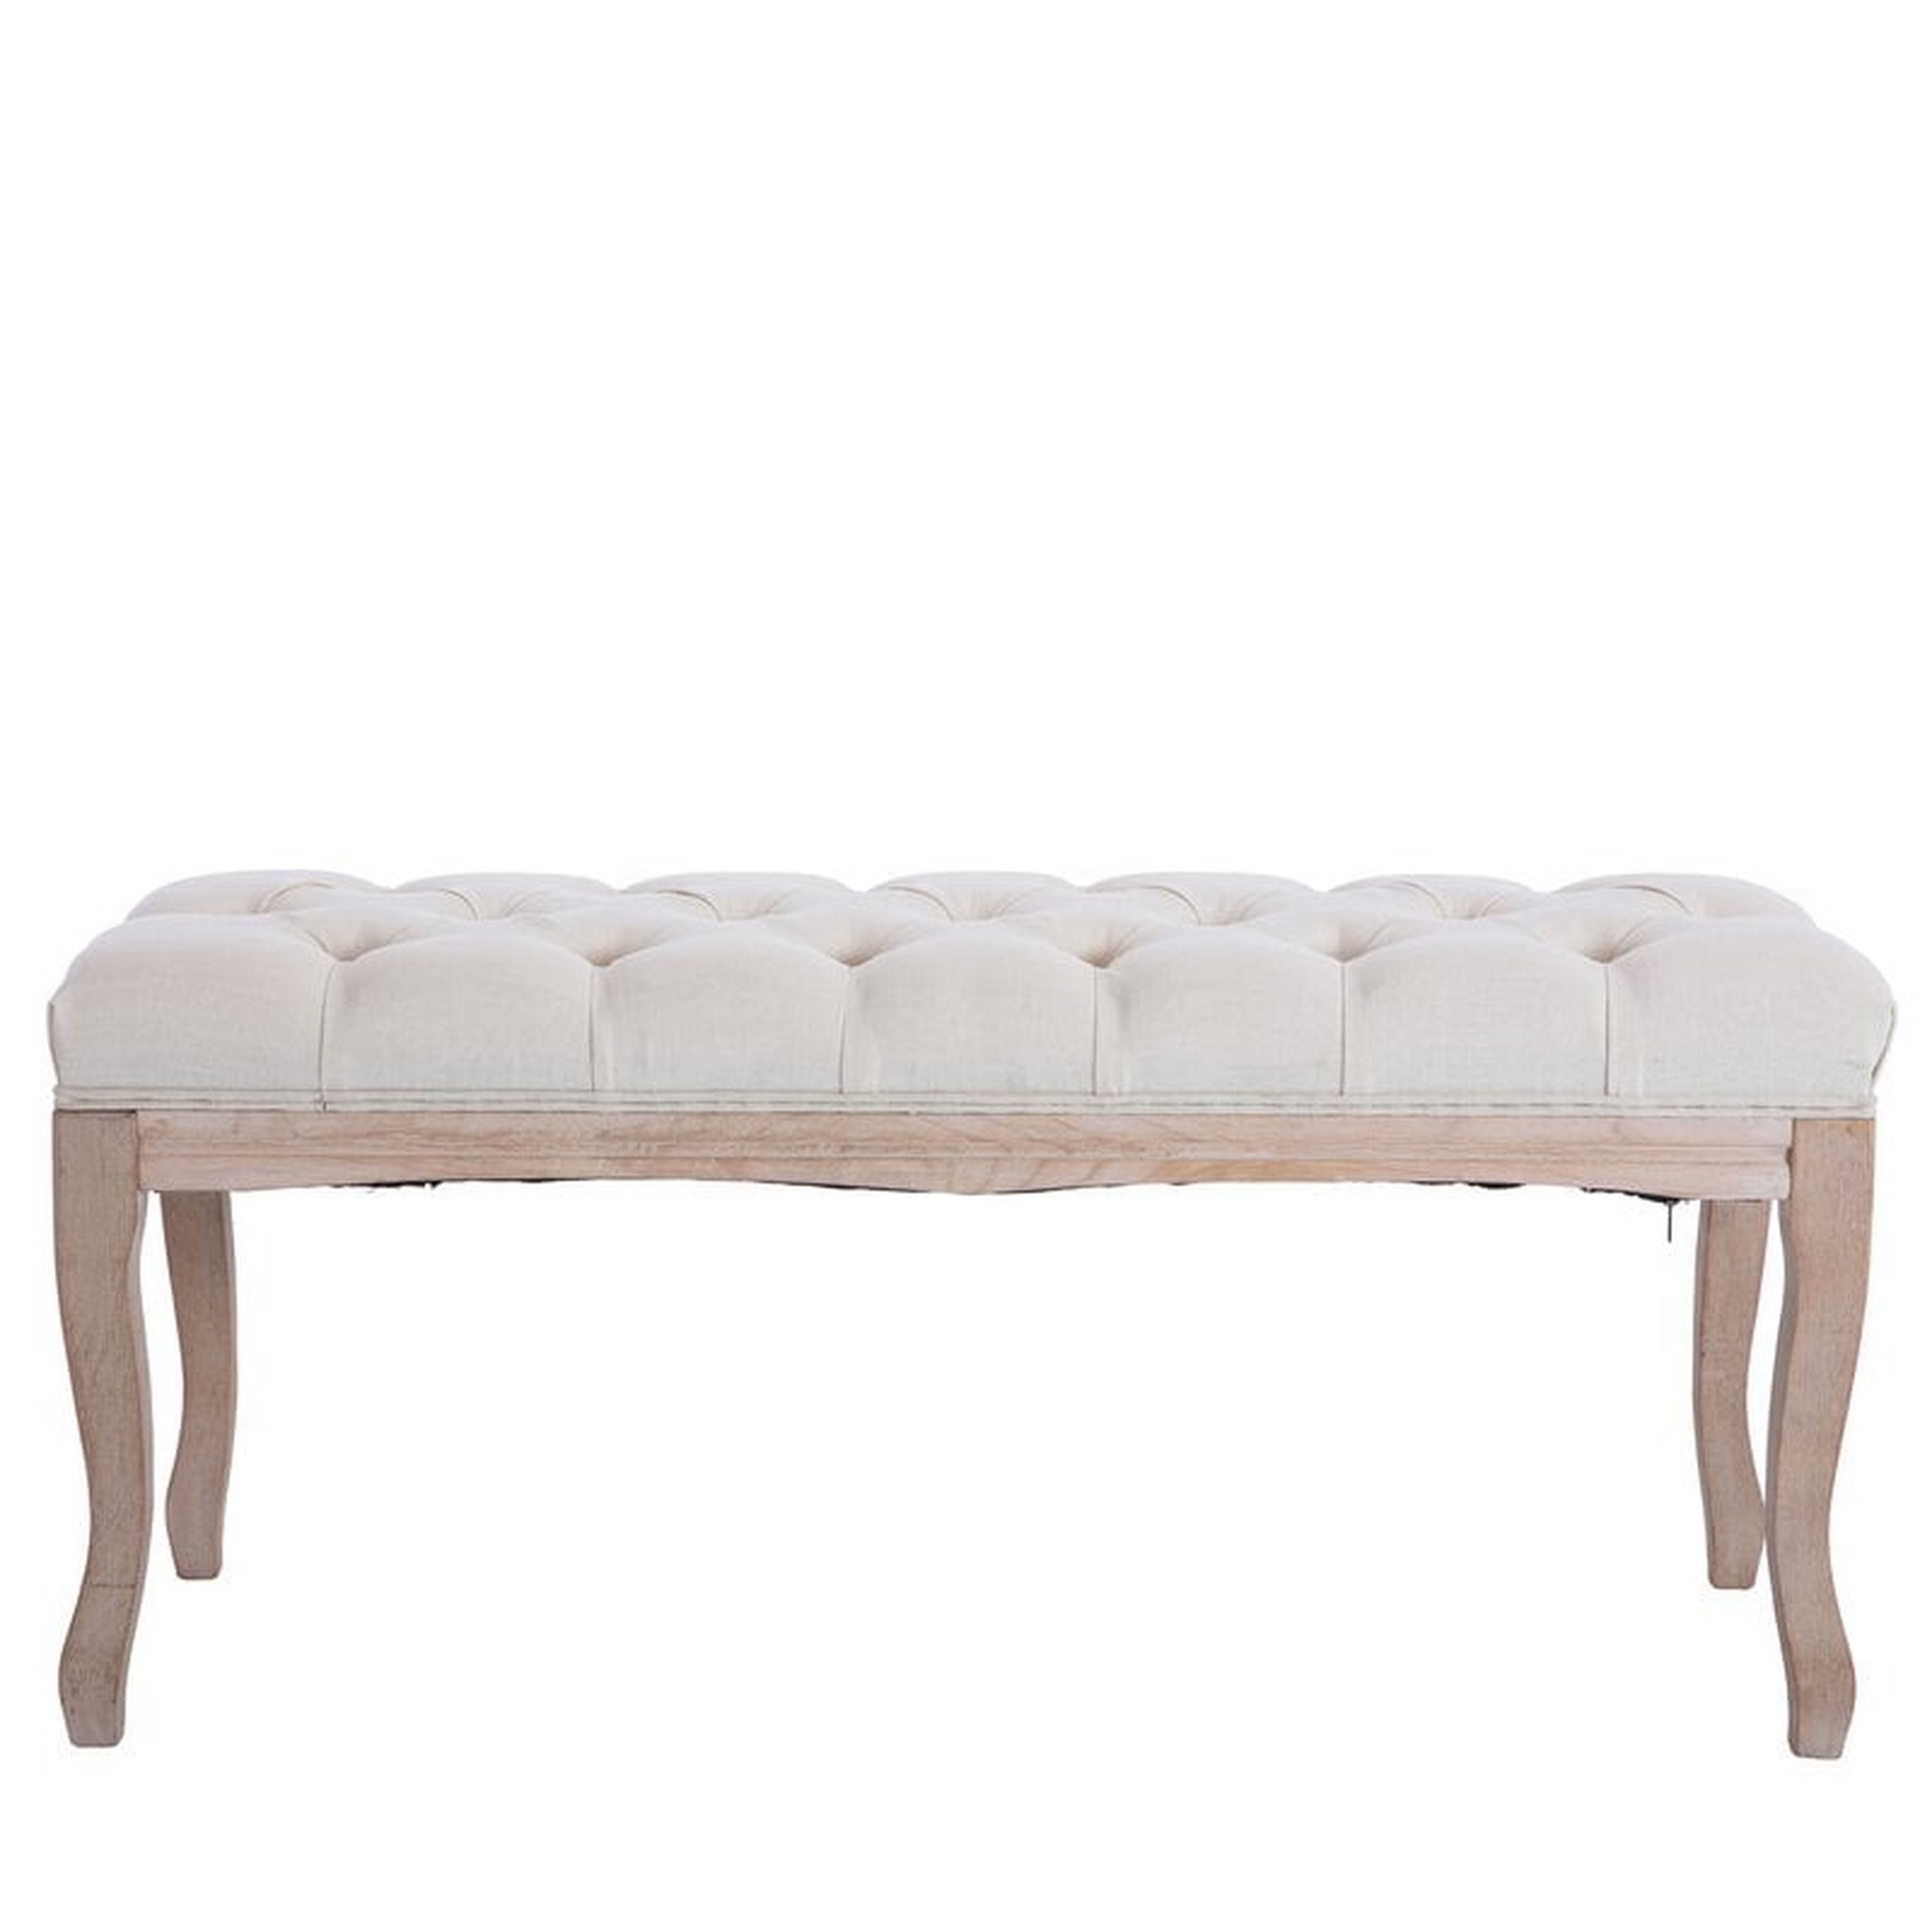 Adan Upholstered Bench - Wayfair